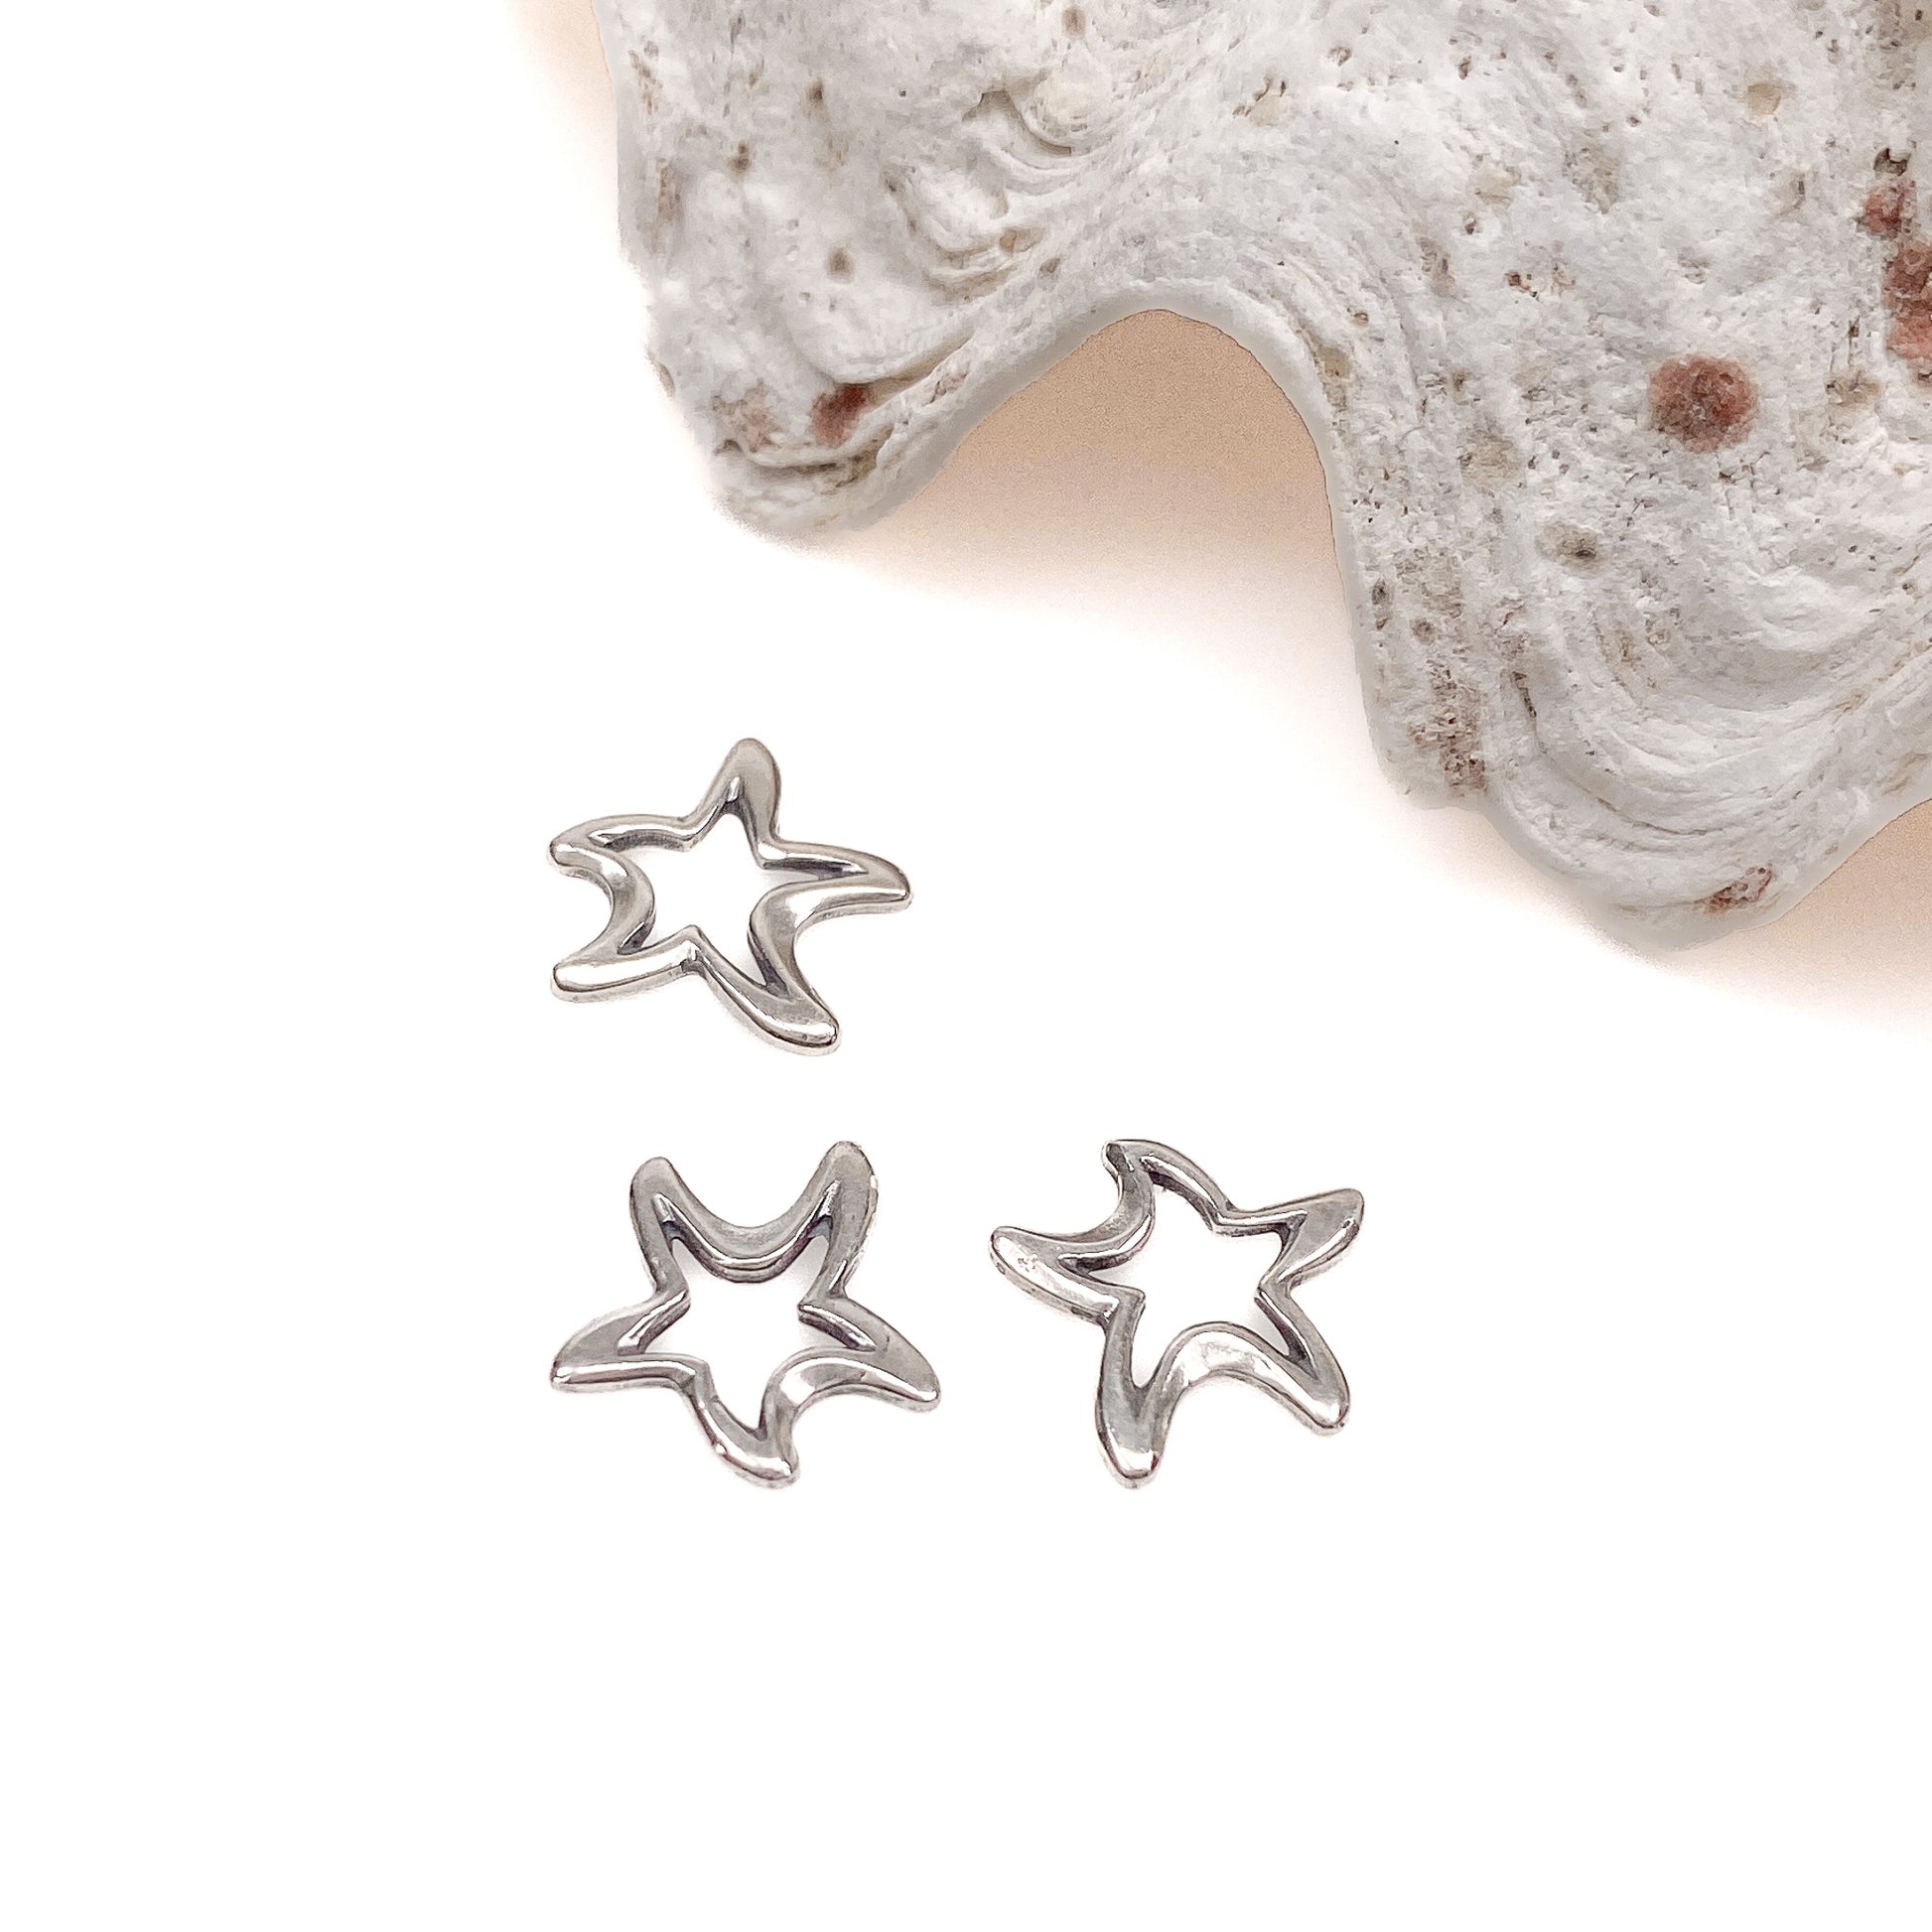 Starfish Ring (Sterling Silver) - 2 pcs.